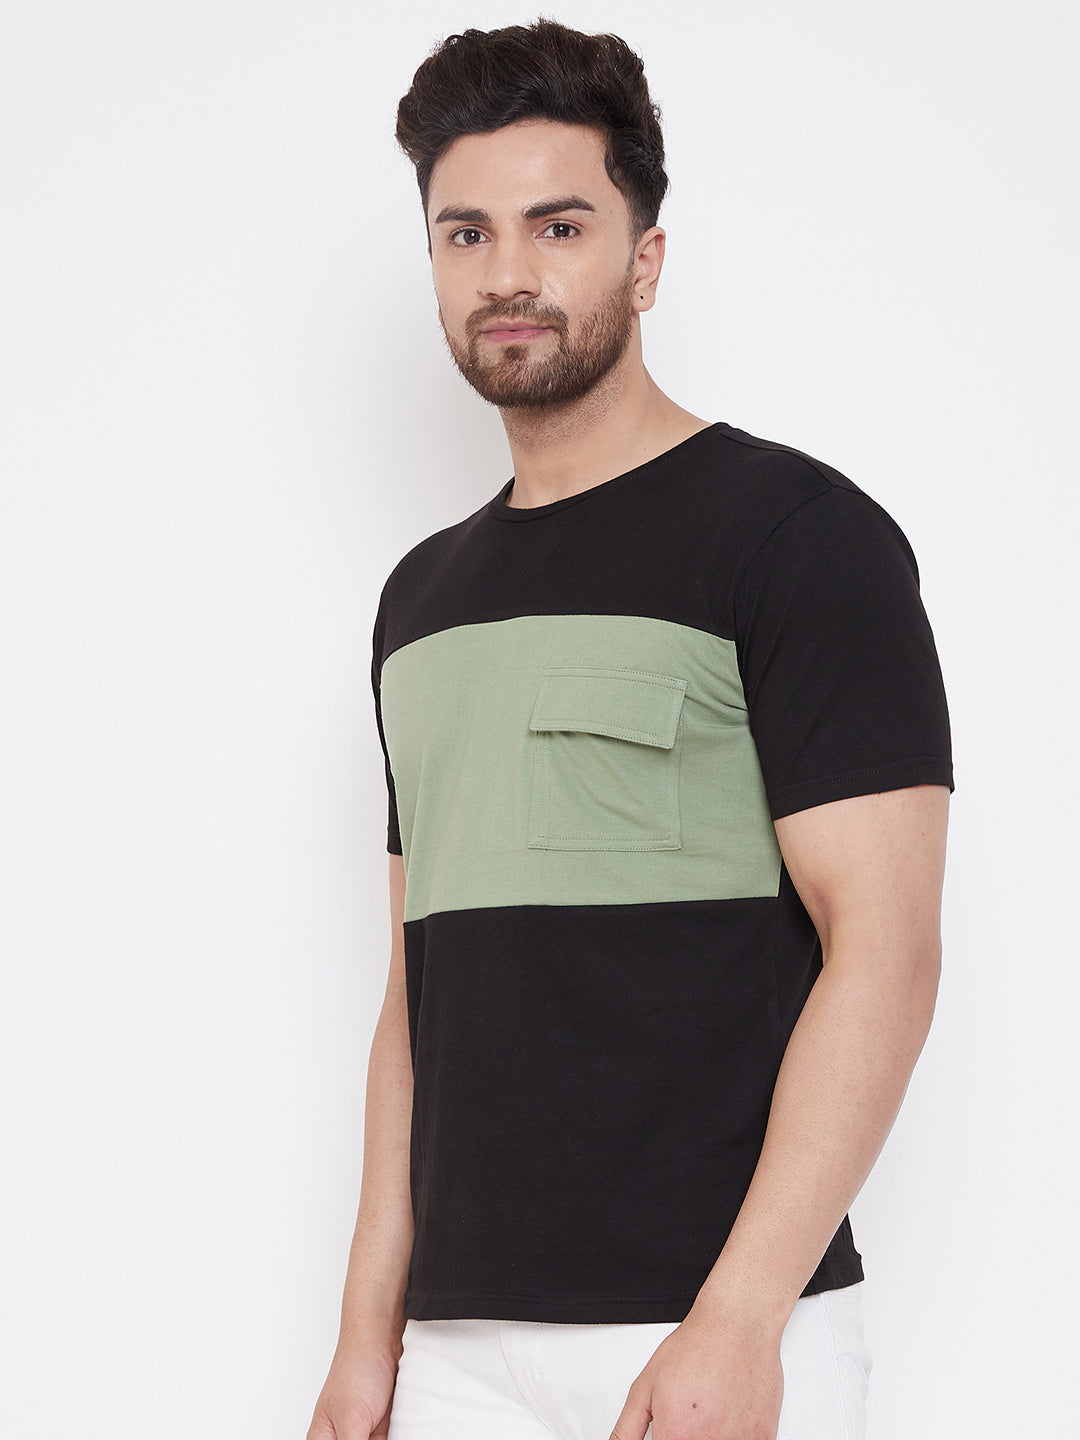 Black/Moss Green Men's Half Sleeves Round Neck T-Shirt